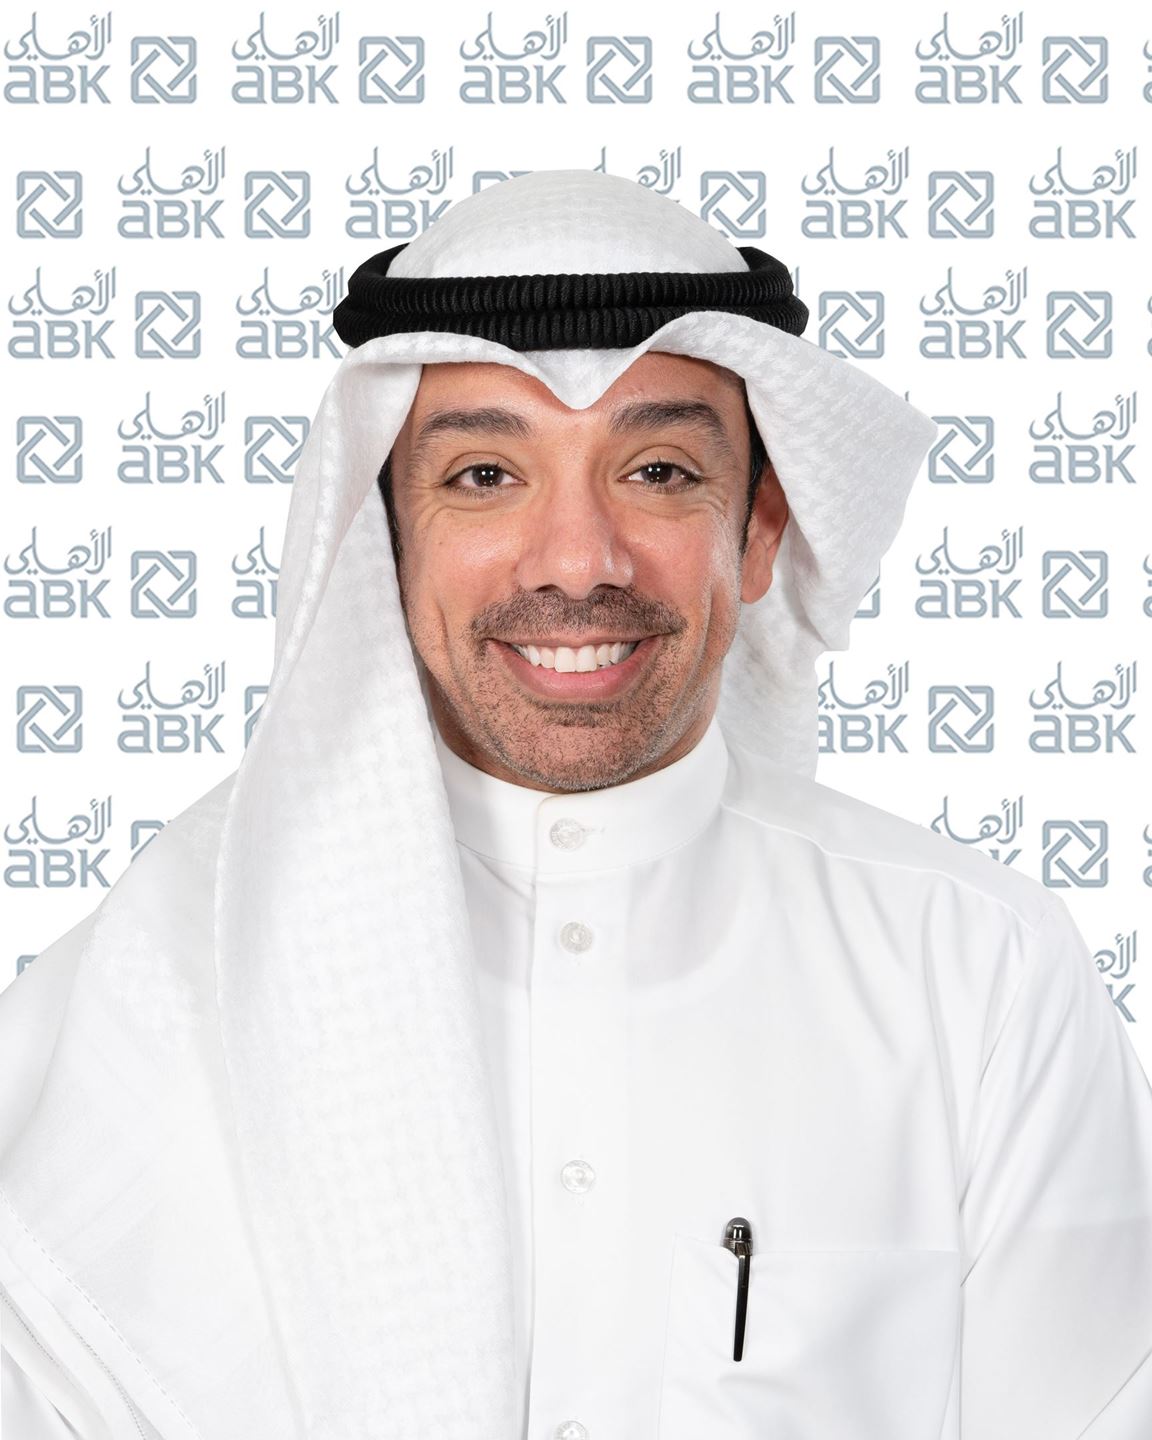 Mr. Sager Albenali, Acting Chief Communications Officer at ABK